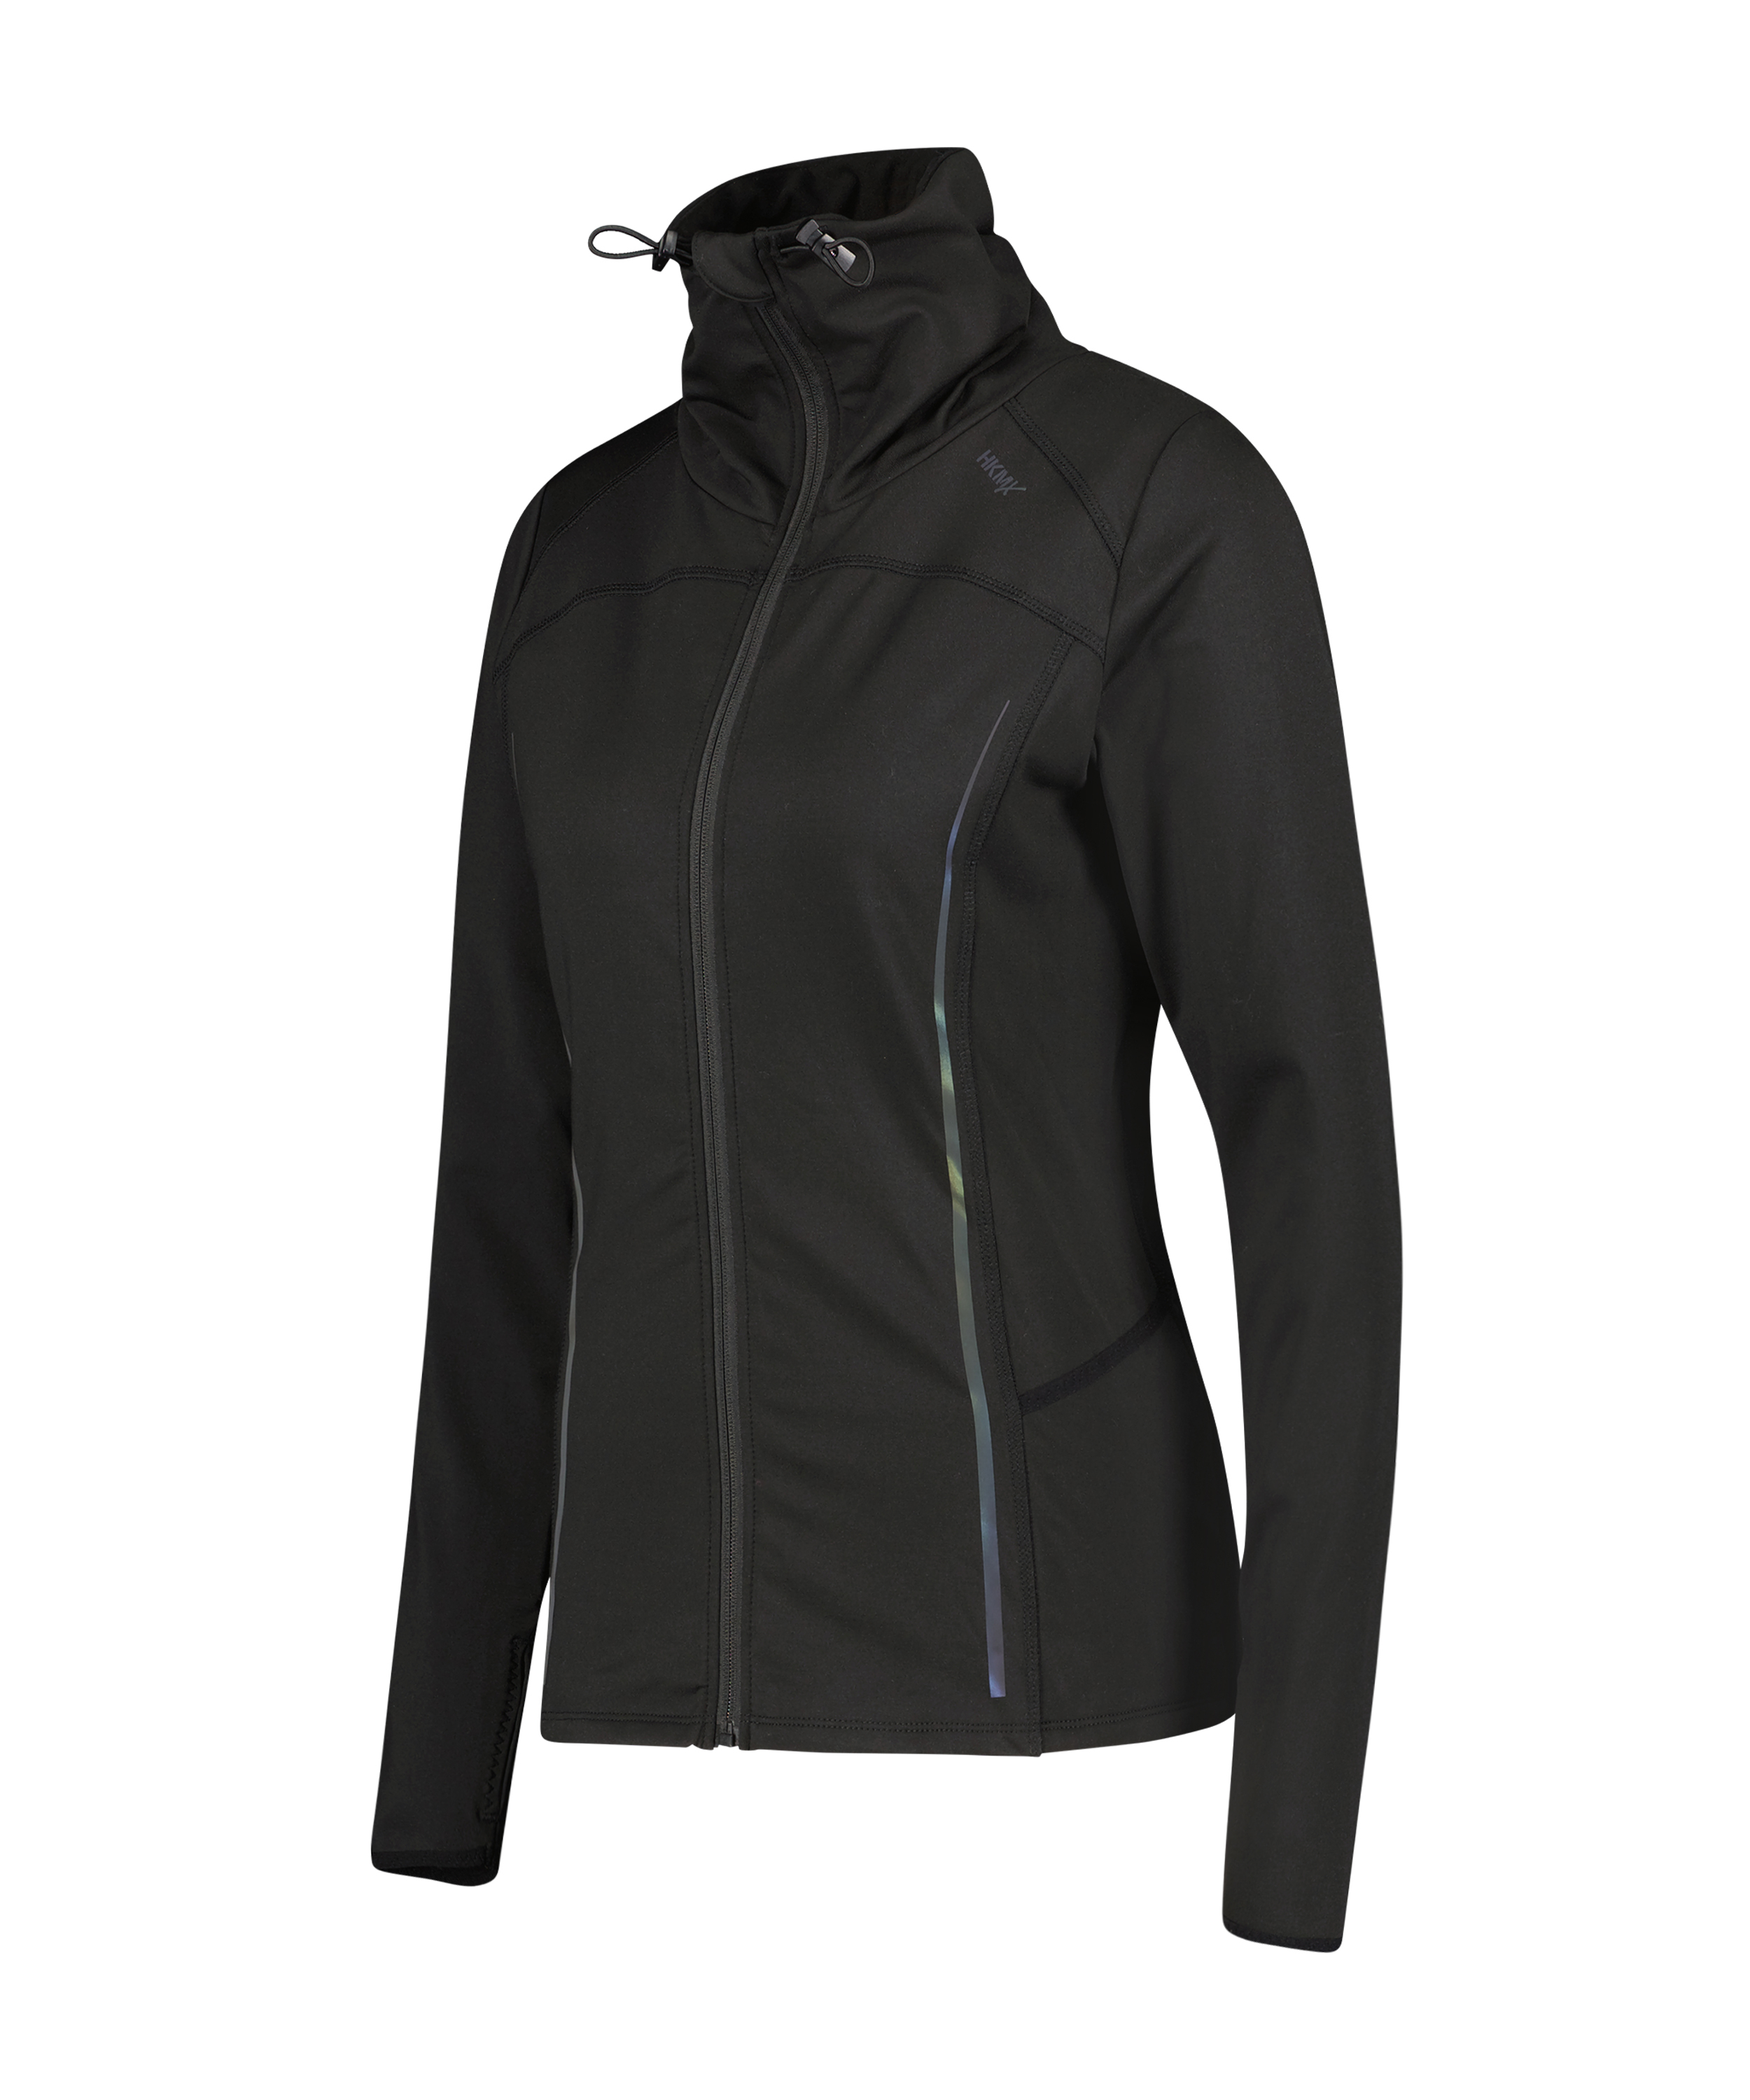 HKMX Sport jacket Winter, Black, main